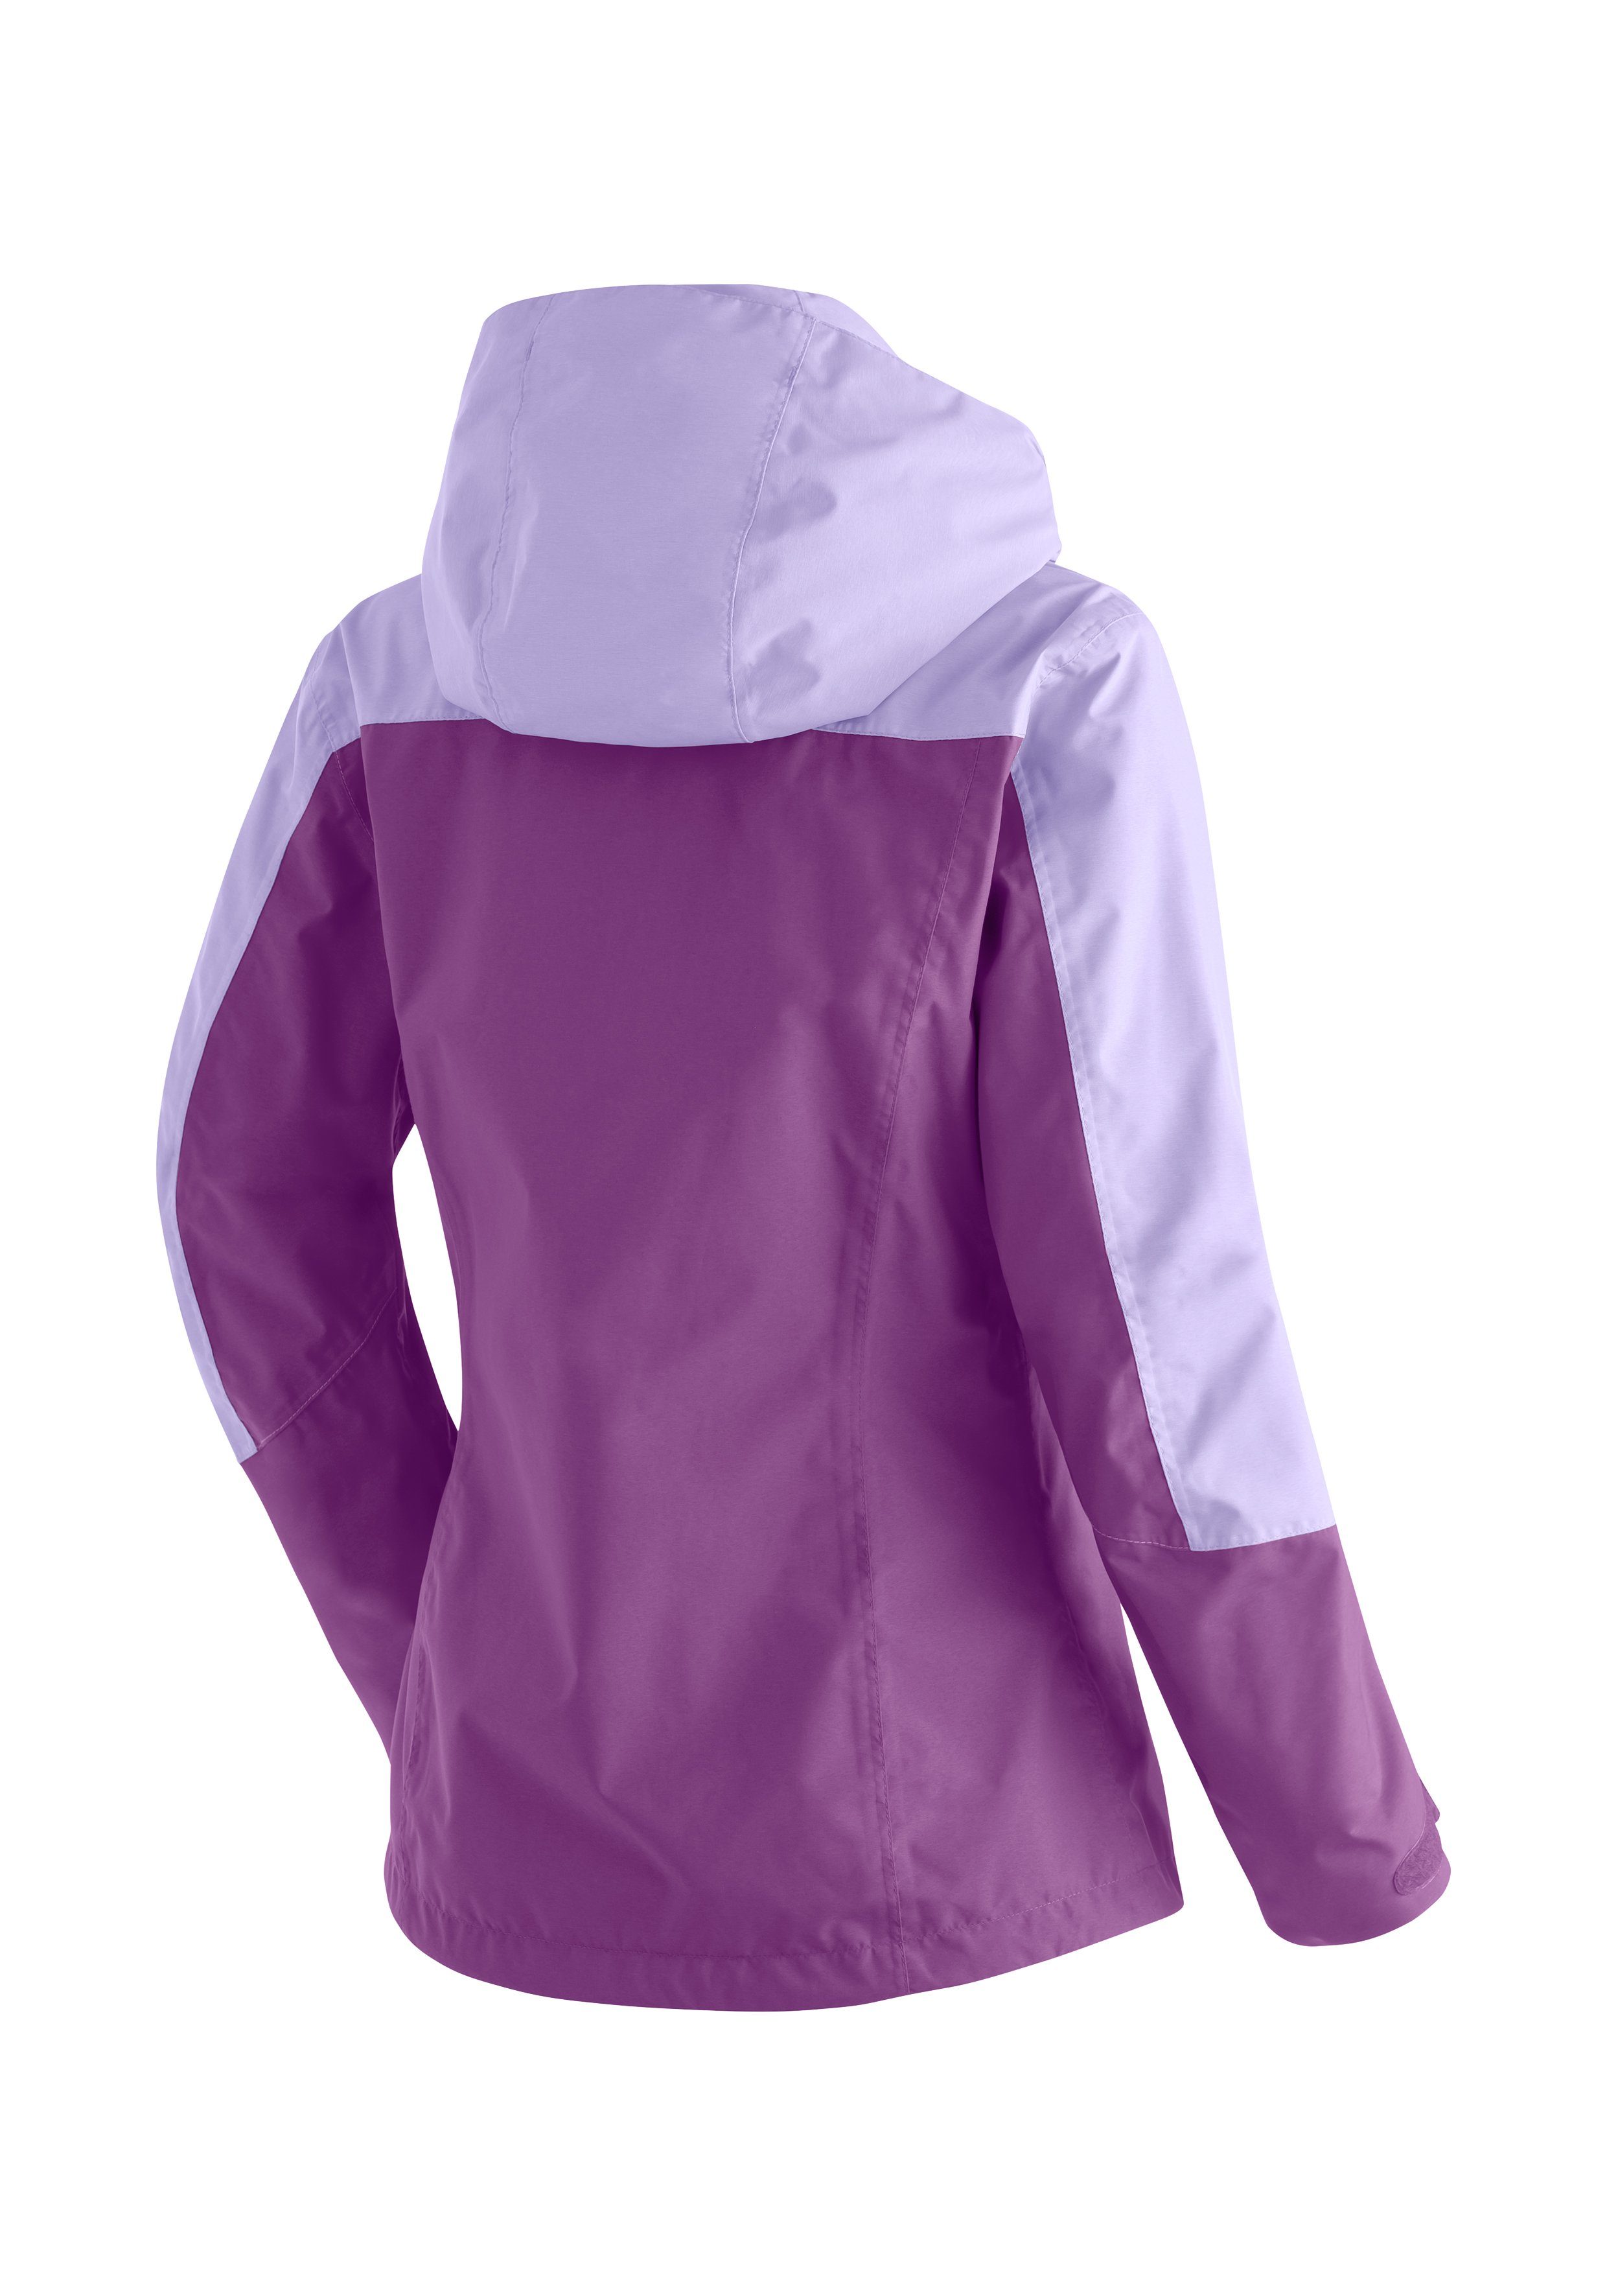 Maier Sports Outdoorjacke Partu Funktionsjacke W aus Material purpurviolett Wasserdichte atmungsaktivem